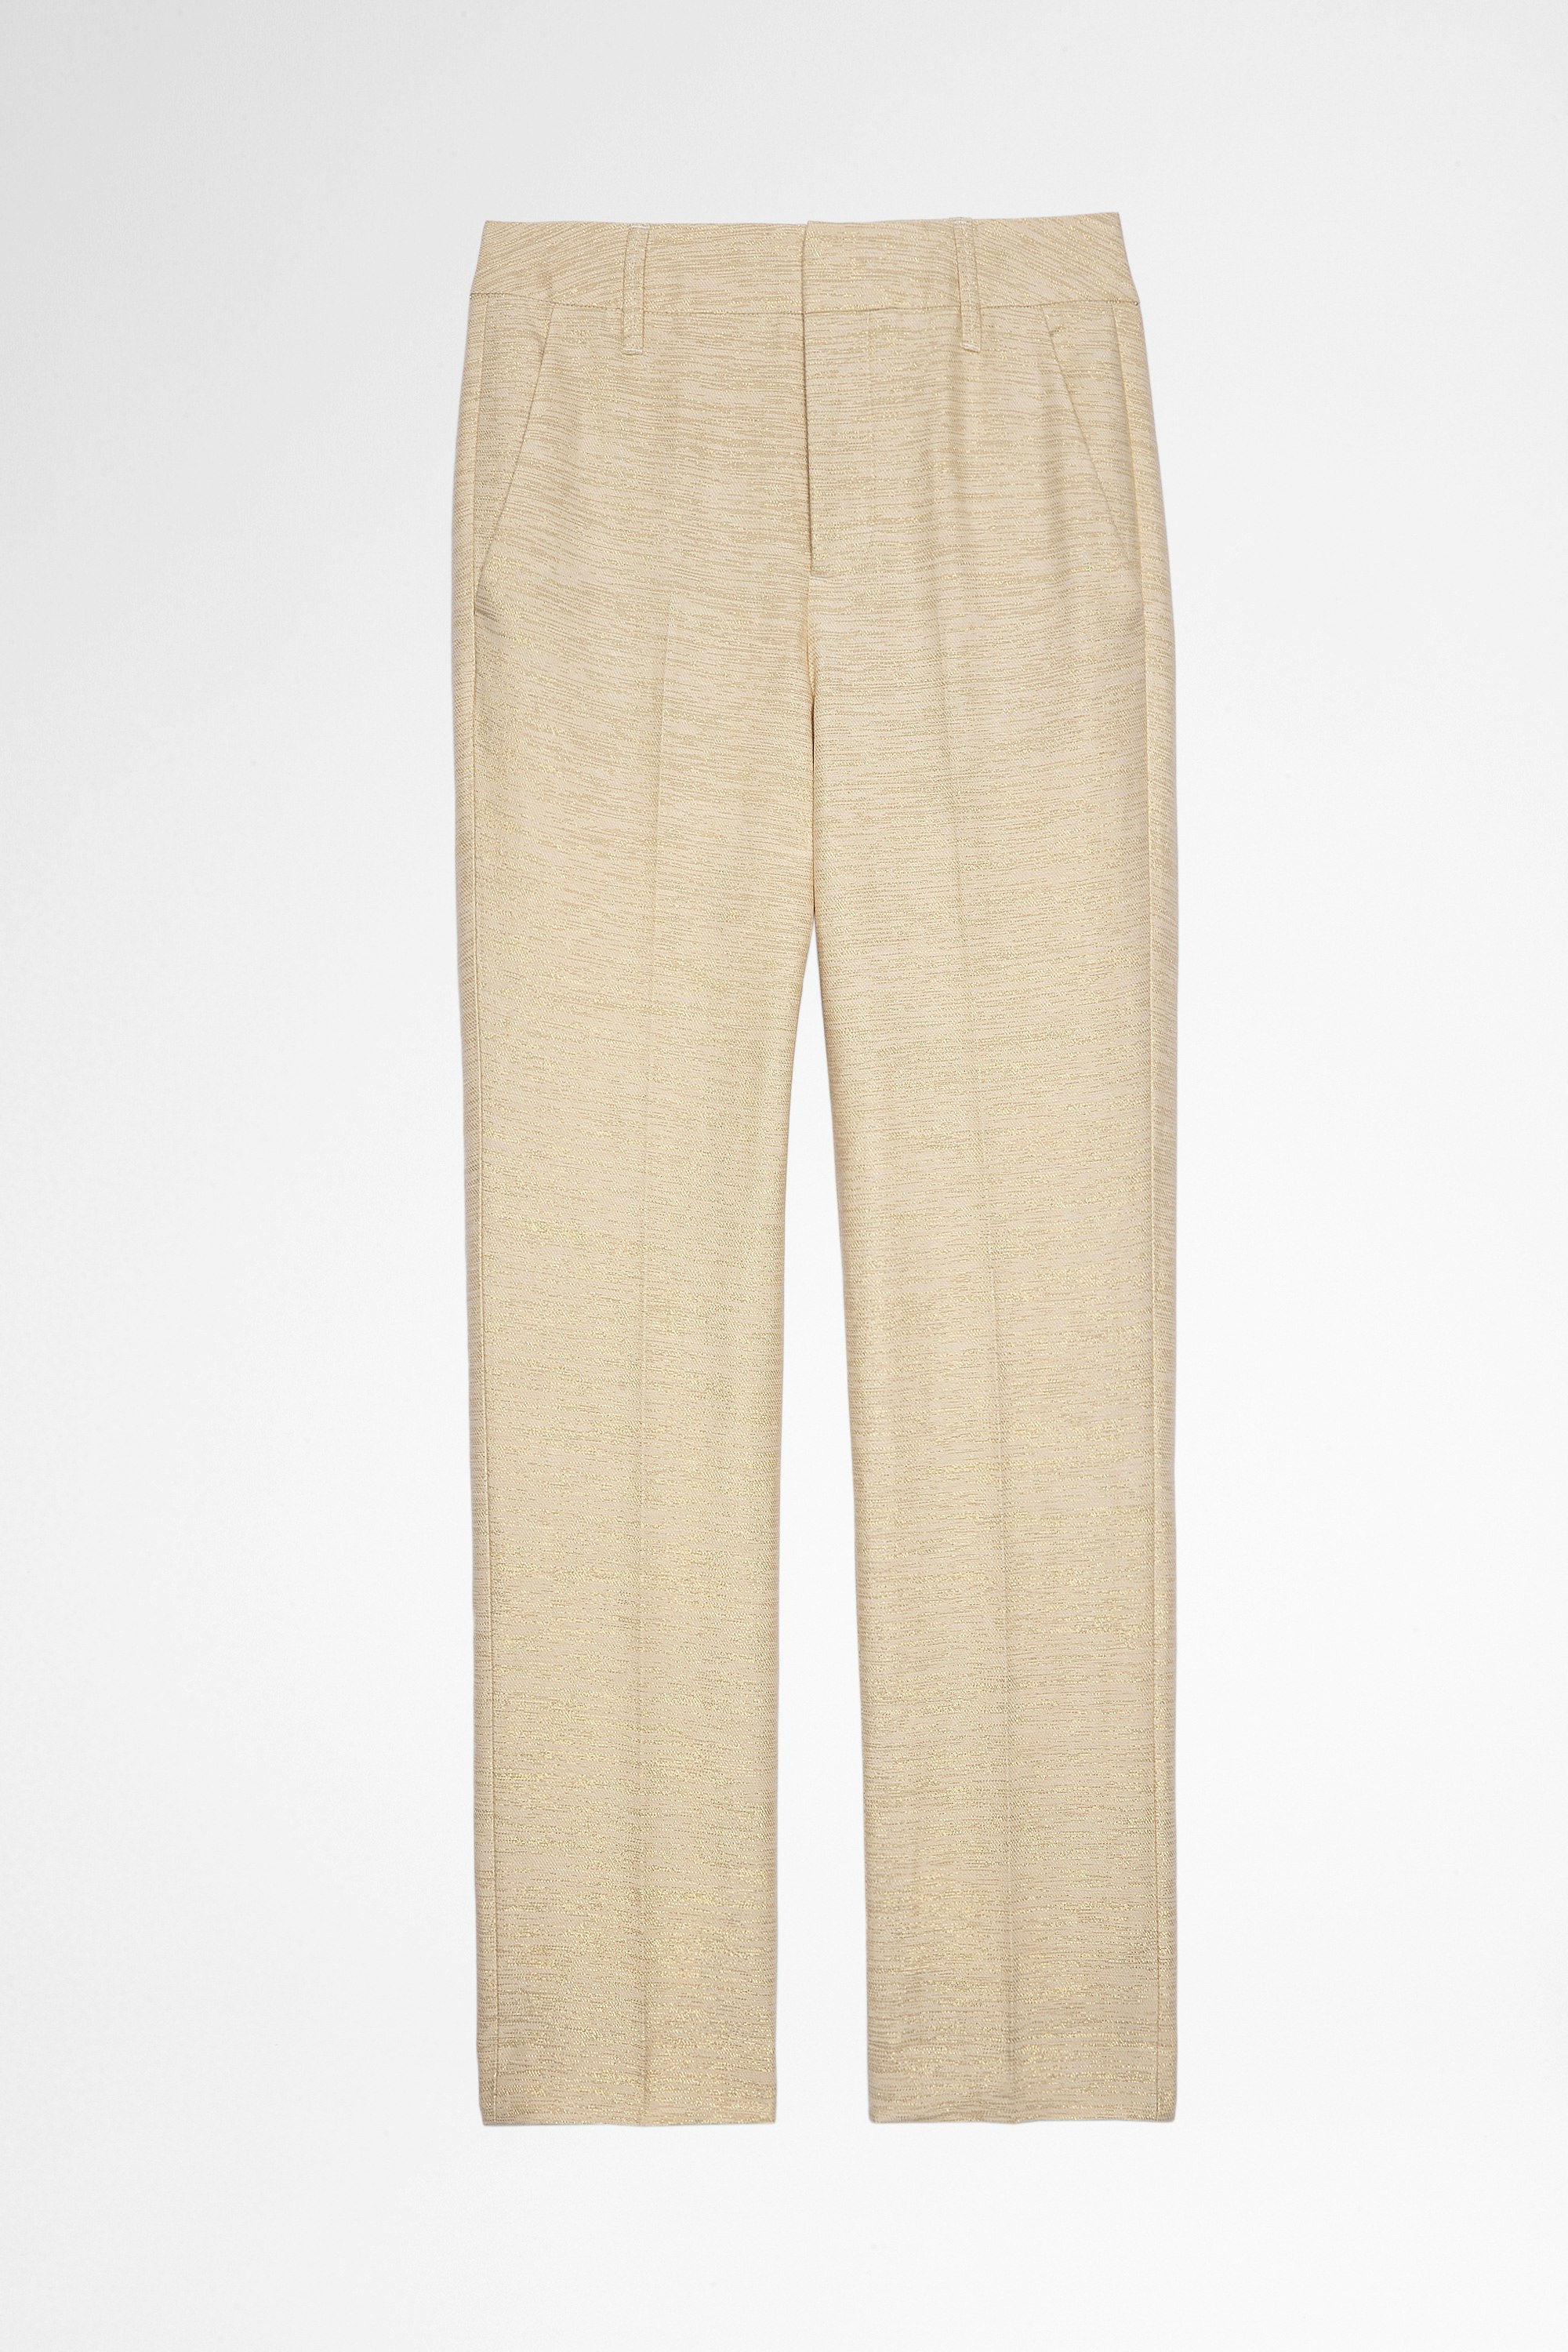 Pantalón Posh Lino Pantalón beige de lino con hilos metalizados dorados para mujer